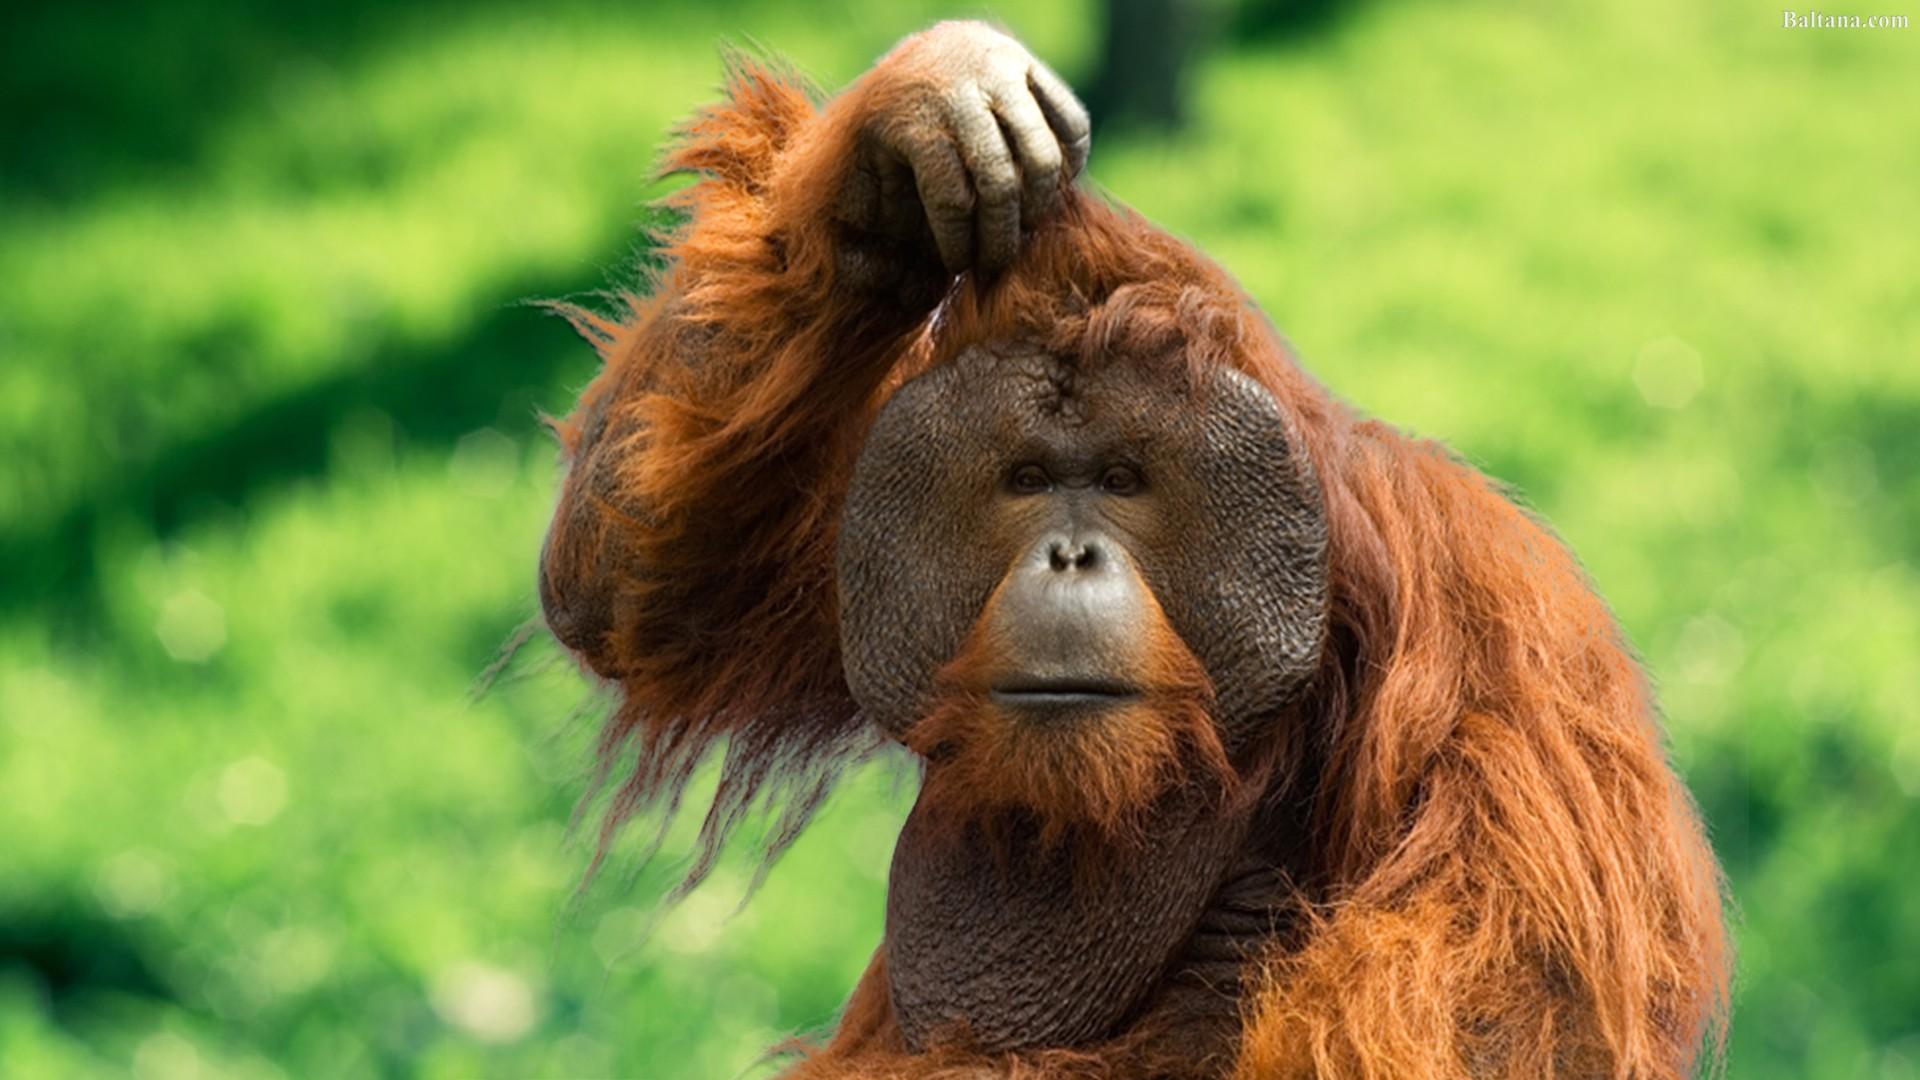 Orangutan Wallpapers 2K Backgrounds, Wallpaper, Pics, Photos Free